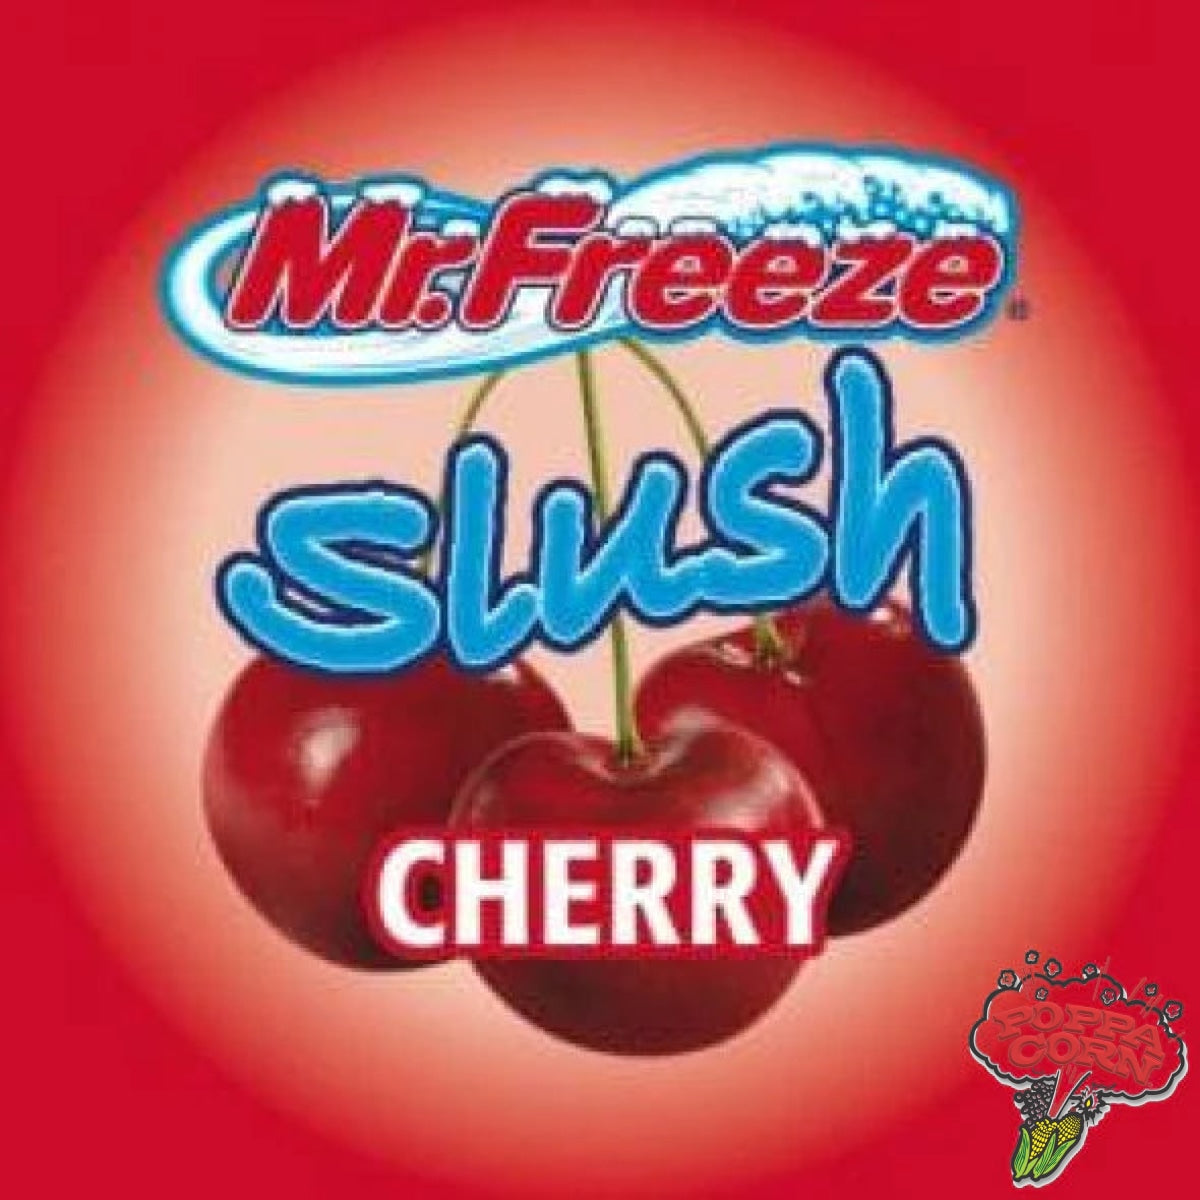 SLU102 - Cherry - Mr. Freeze Slush Pouches - Bag in Box - Poppa Corn Corp